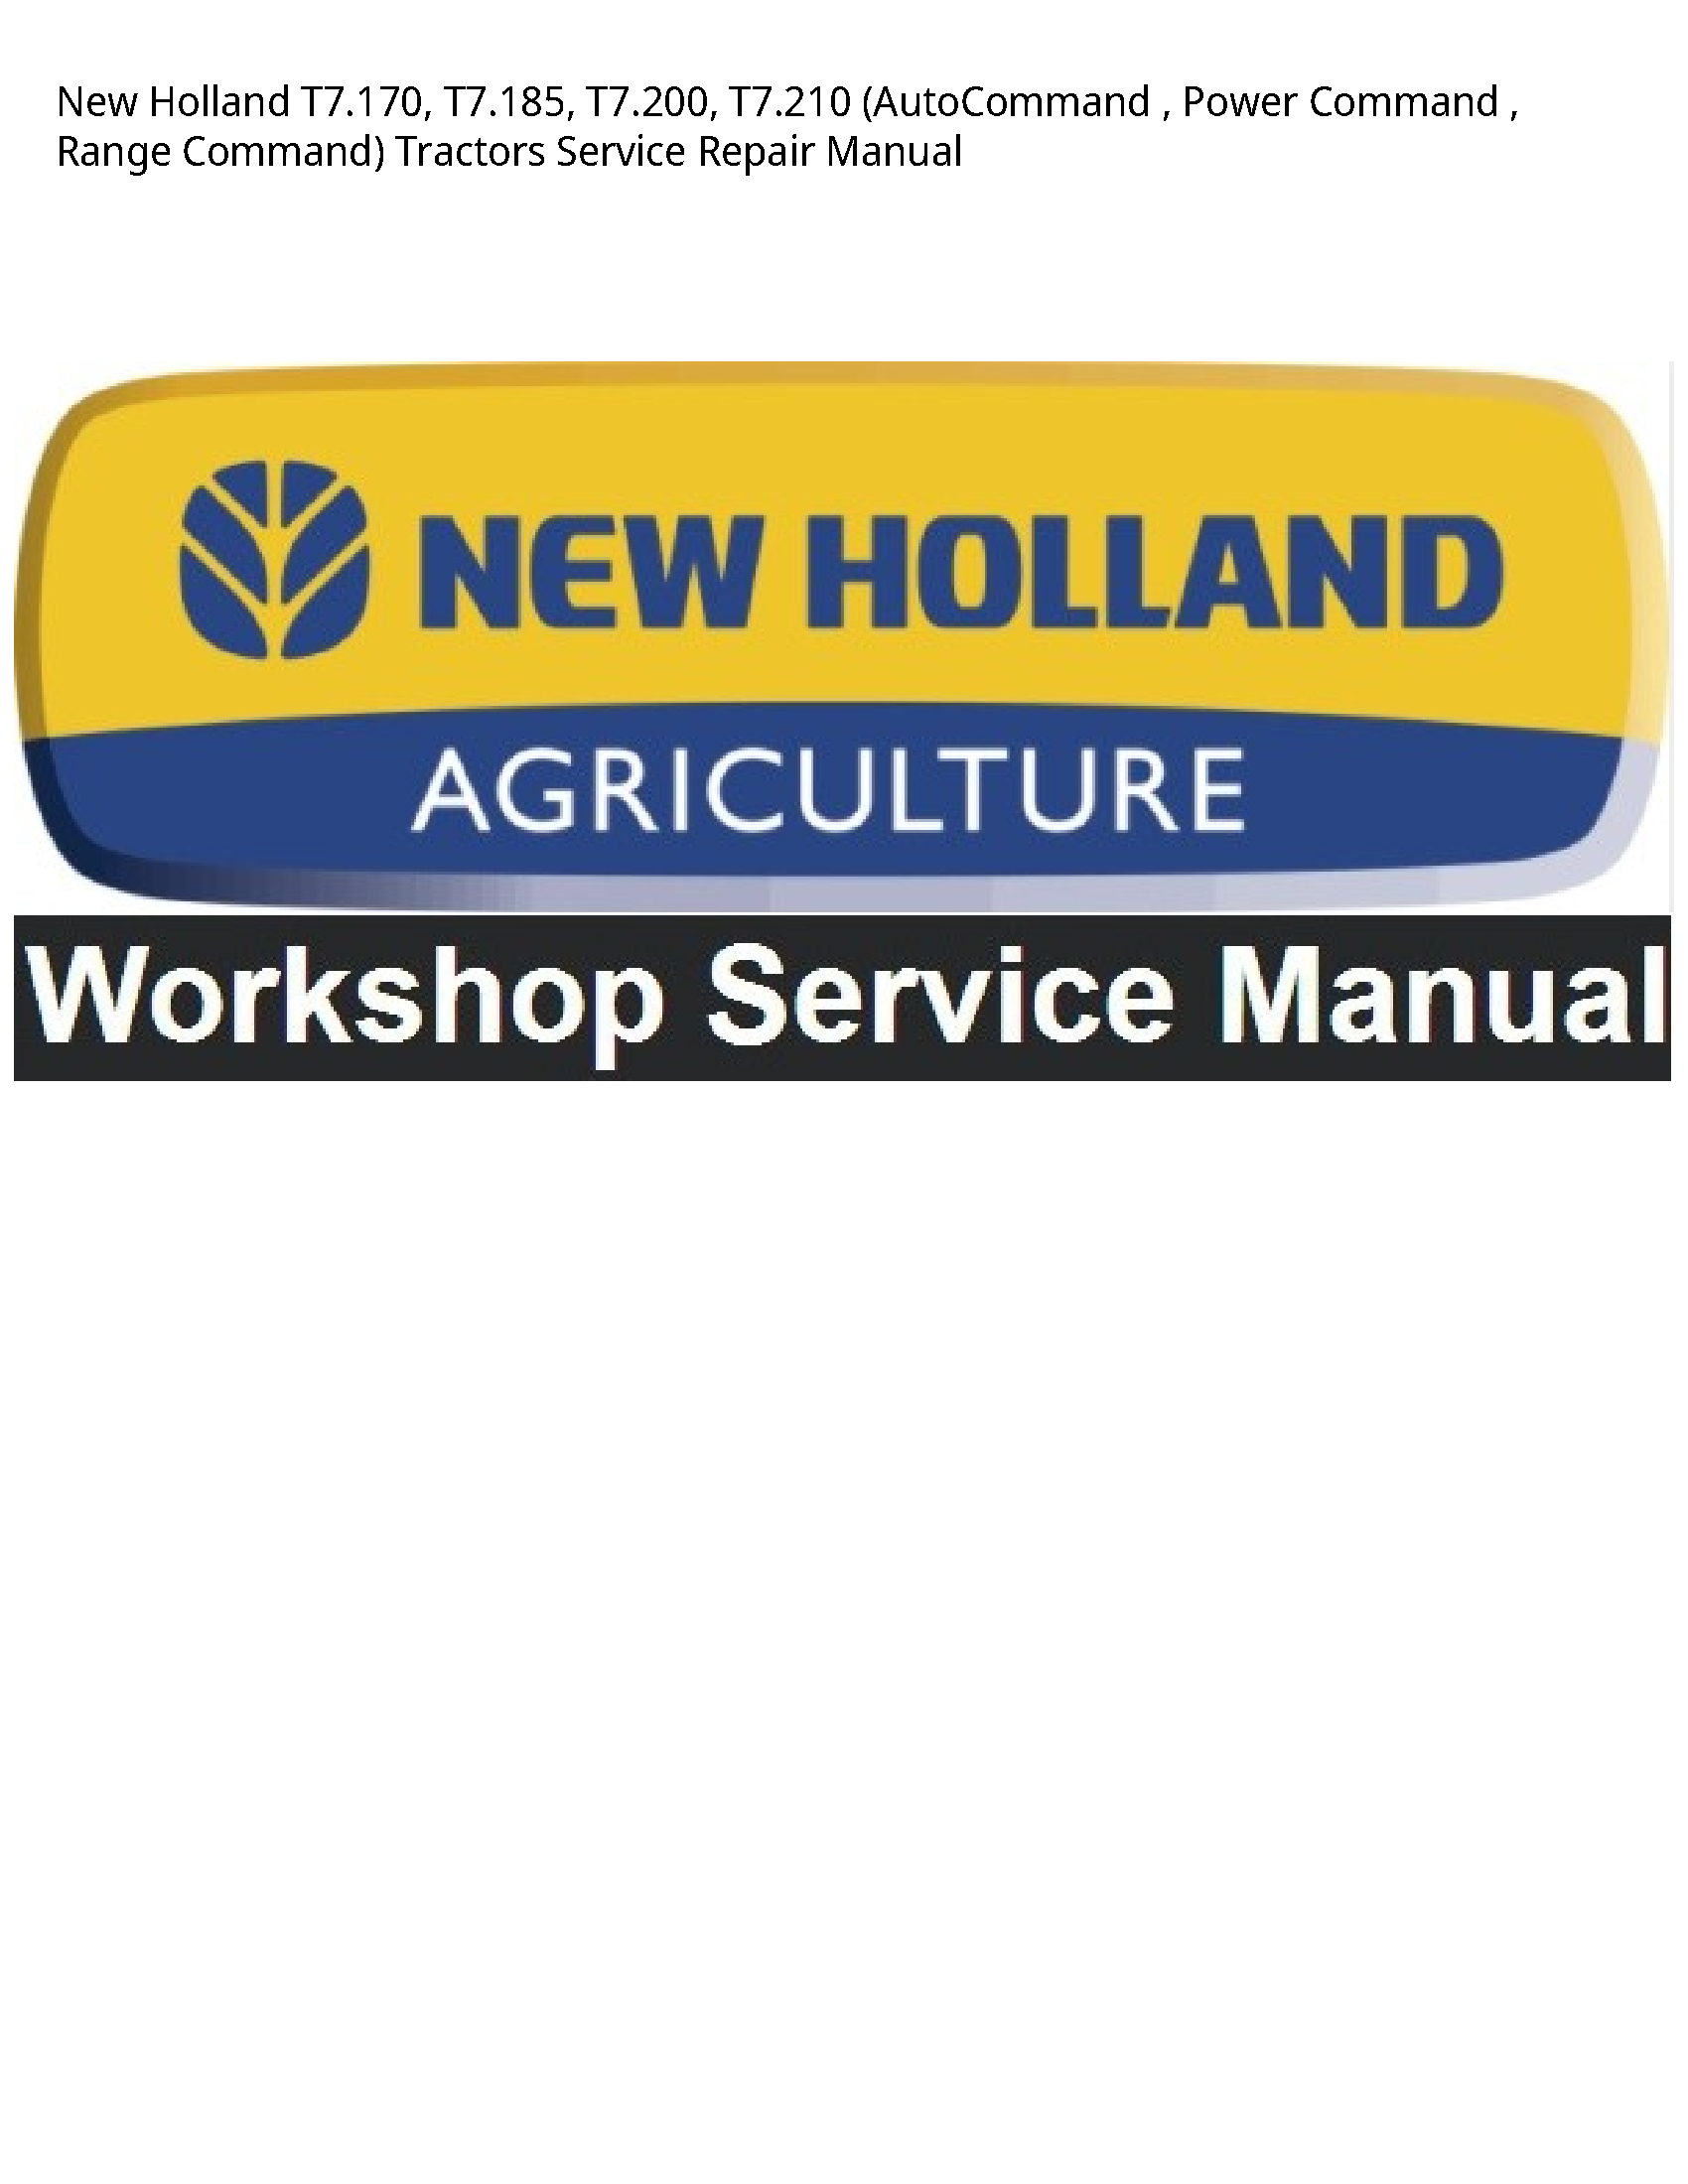 New Holland T7.170 (AutoCommand Power Command Range Command) Tractors manual